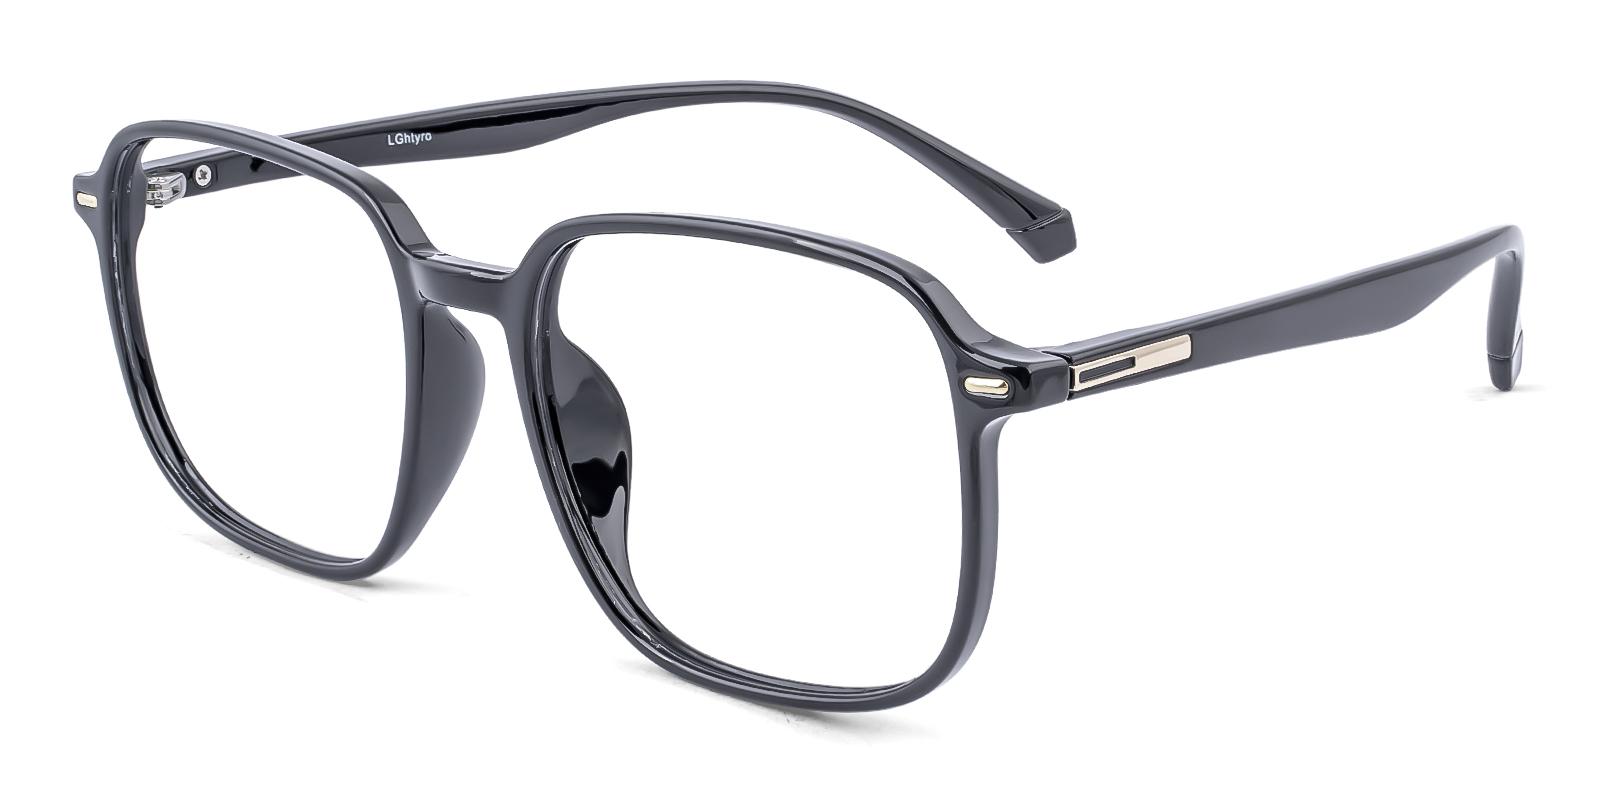 Phoarium Black Plastic Eyeglasses , UniversalBridgeFit Frames from ABBE Glasses